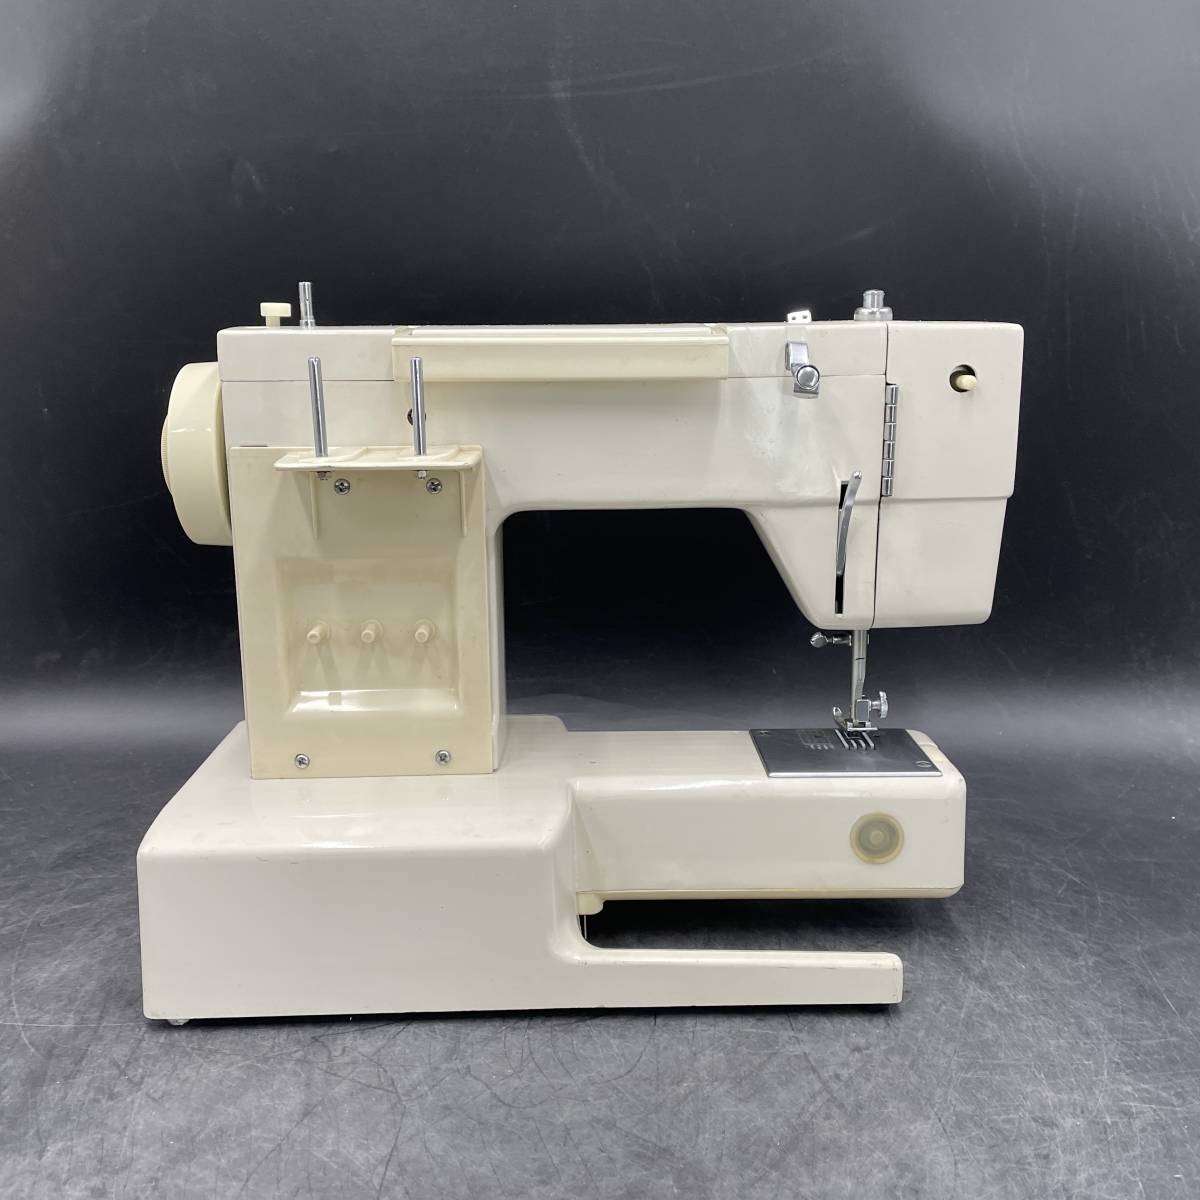  corporation kayak sewing machine Araliy sewing [312]